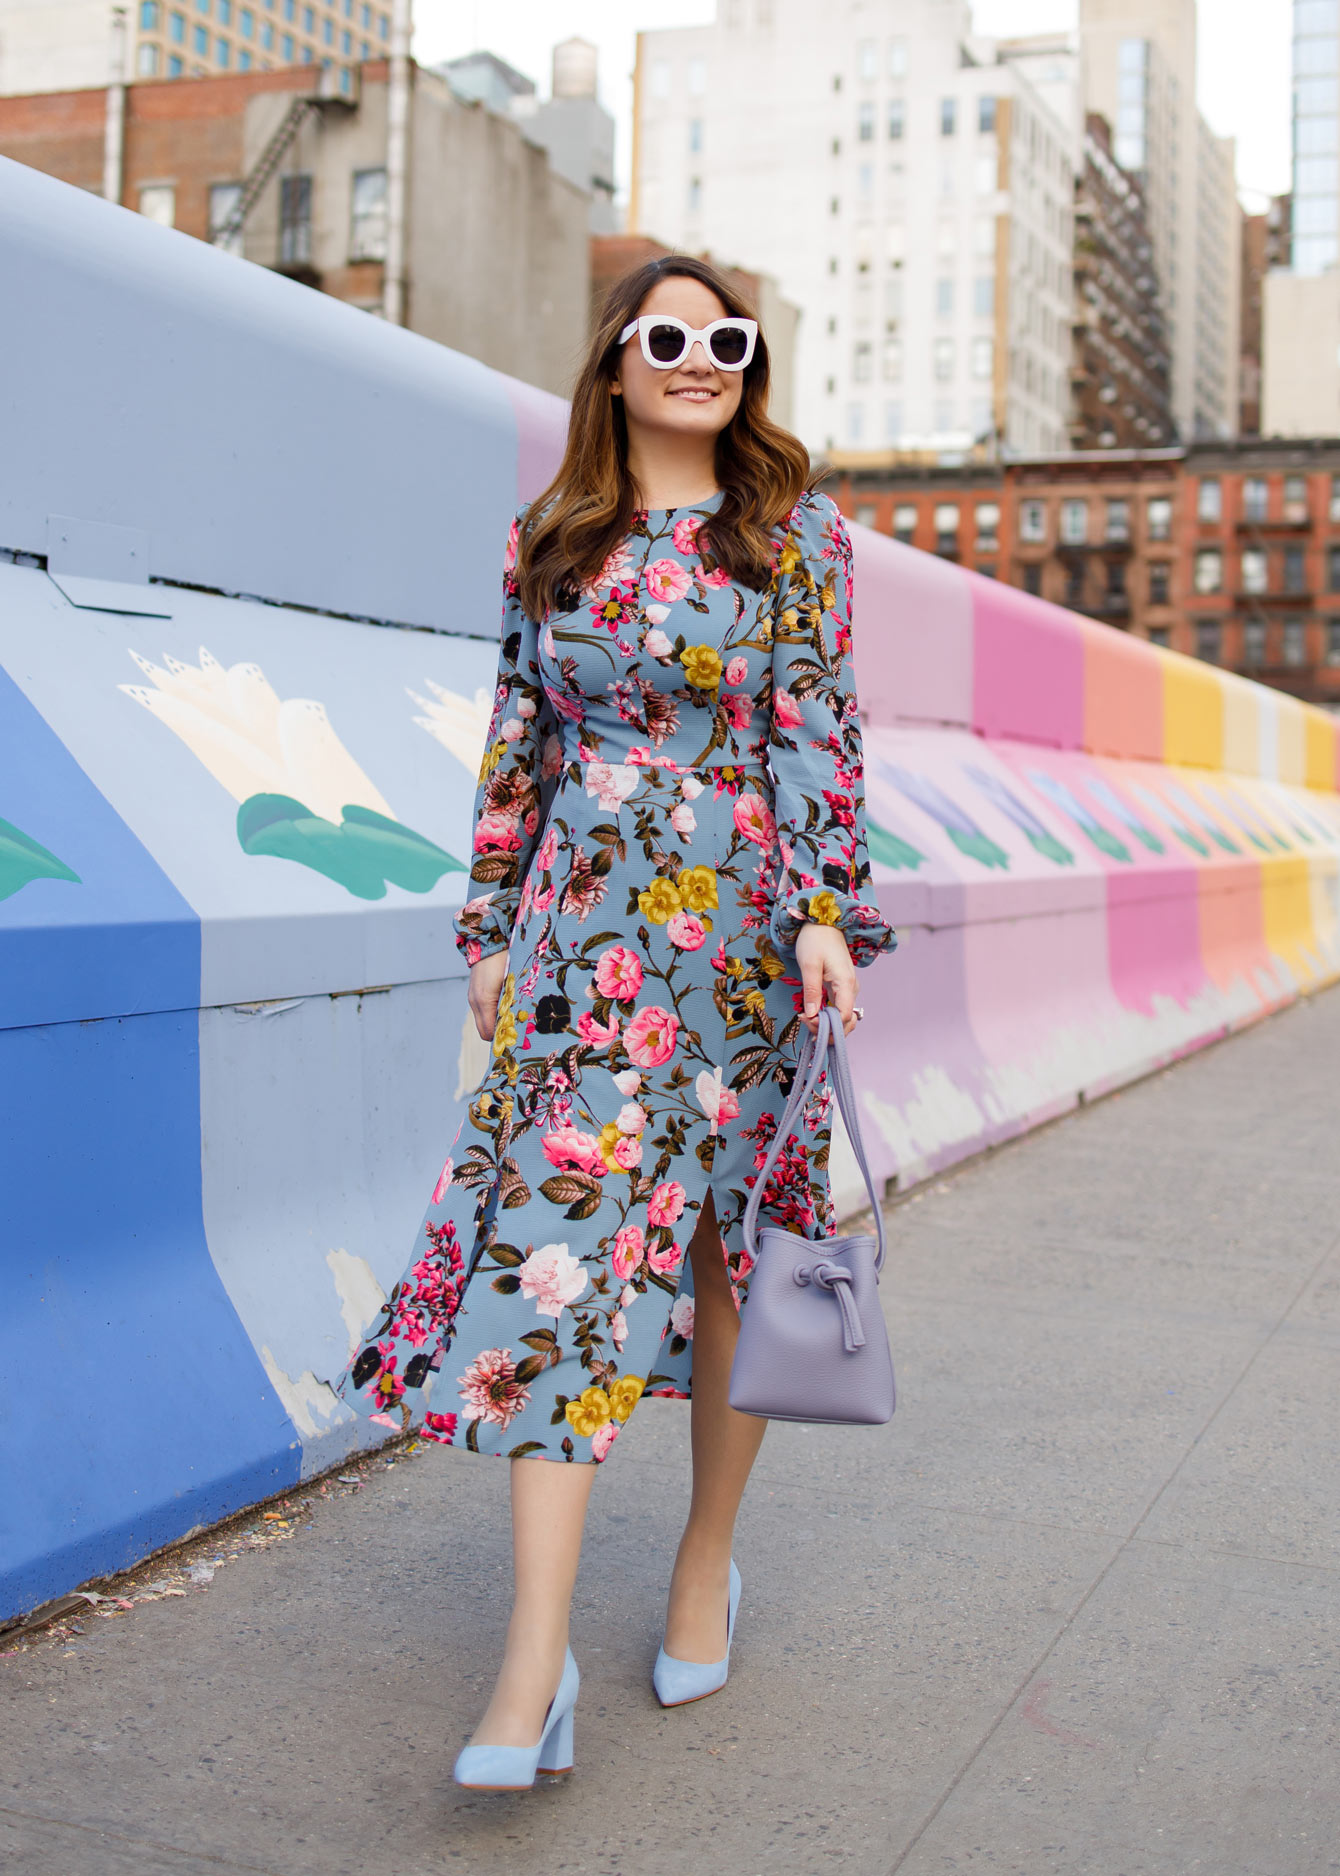 Eliza J Floral Print Midi Dress in New York City - Style Charade